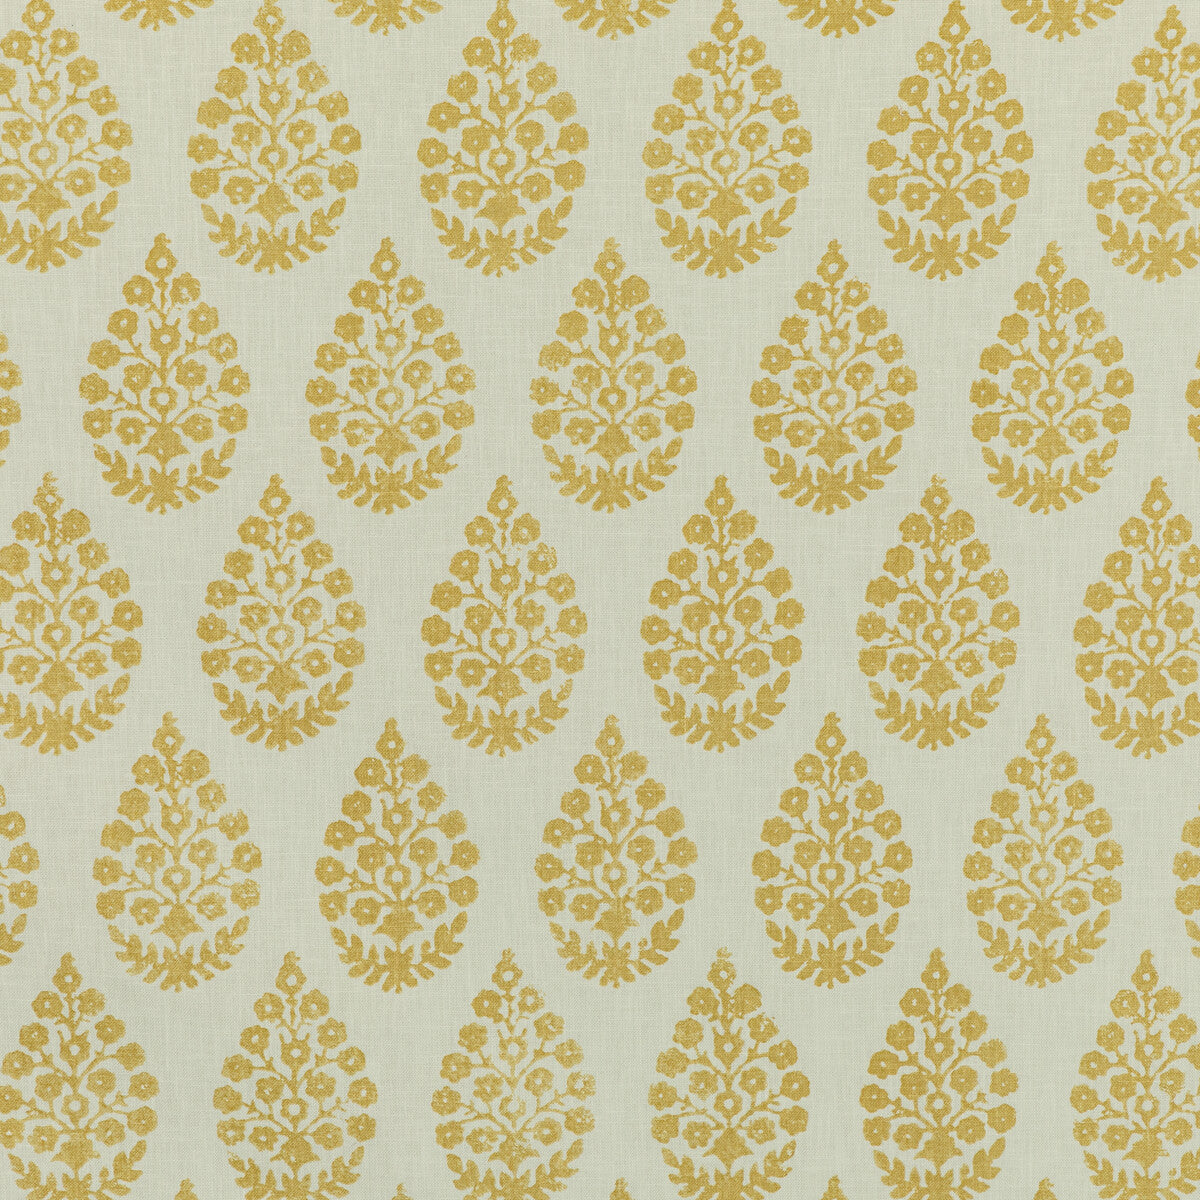 Kravet Basics fabric in tajpaisley-40 color - pattern TAJPAISLEY.40.0 - by Kravet Basics in the L&